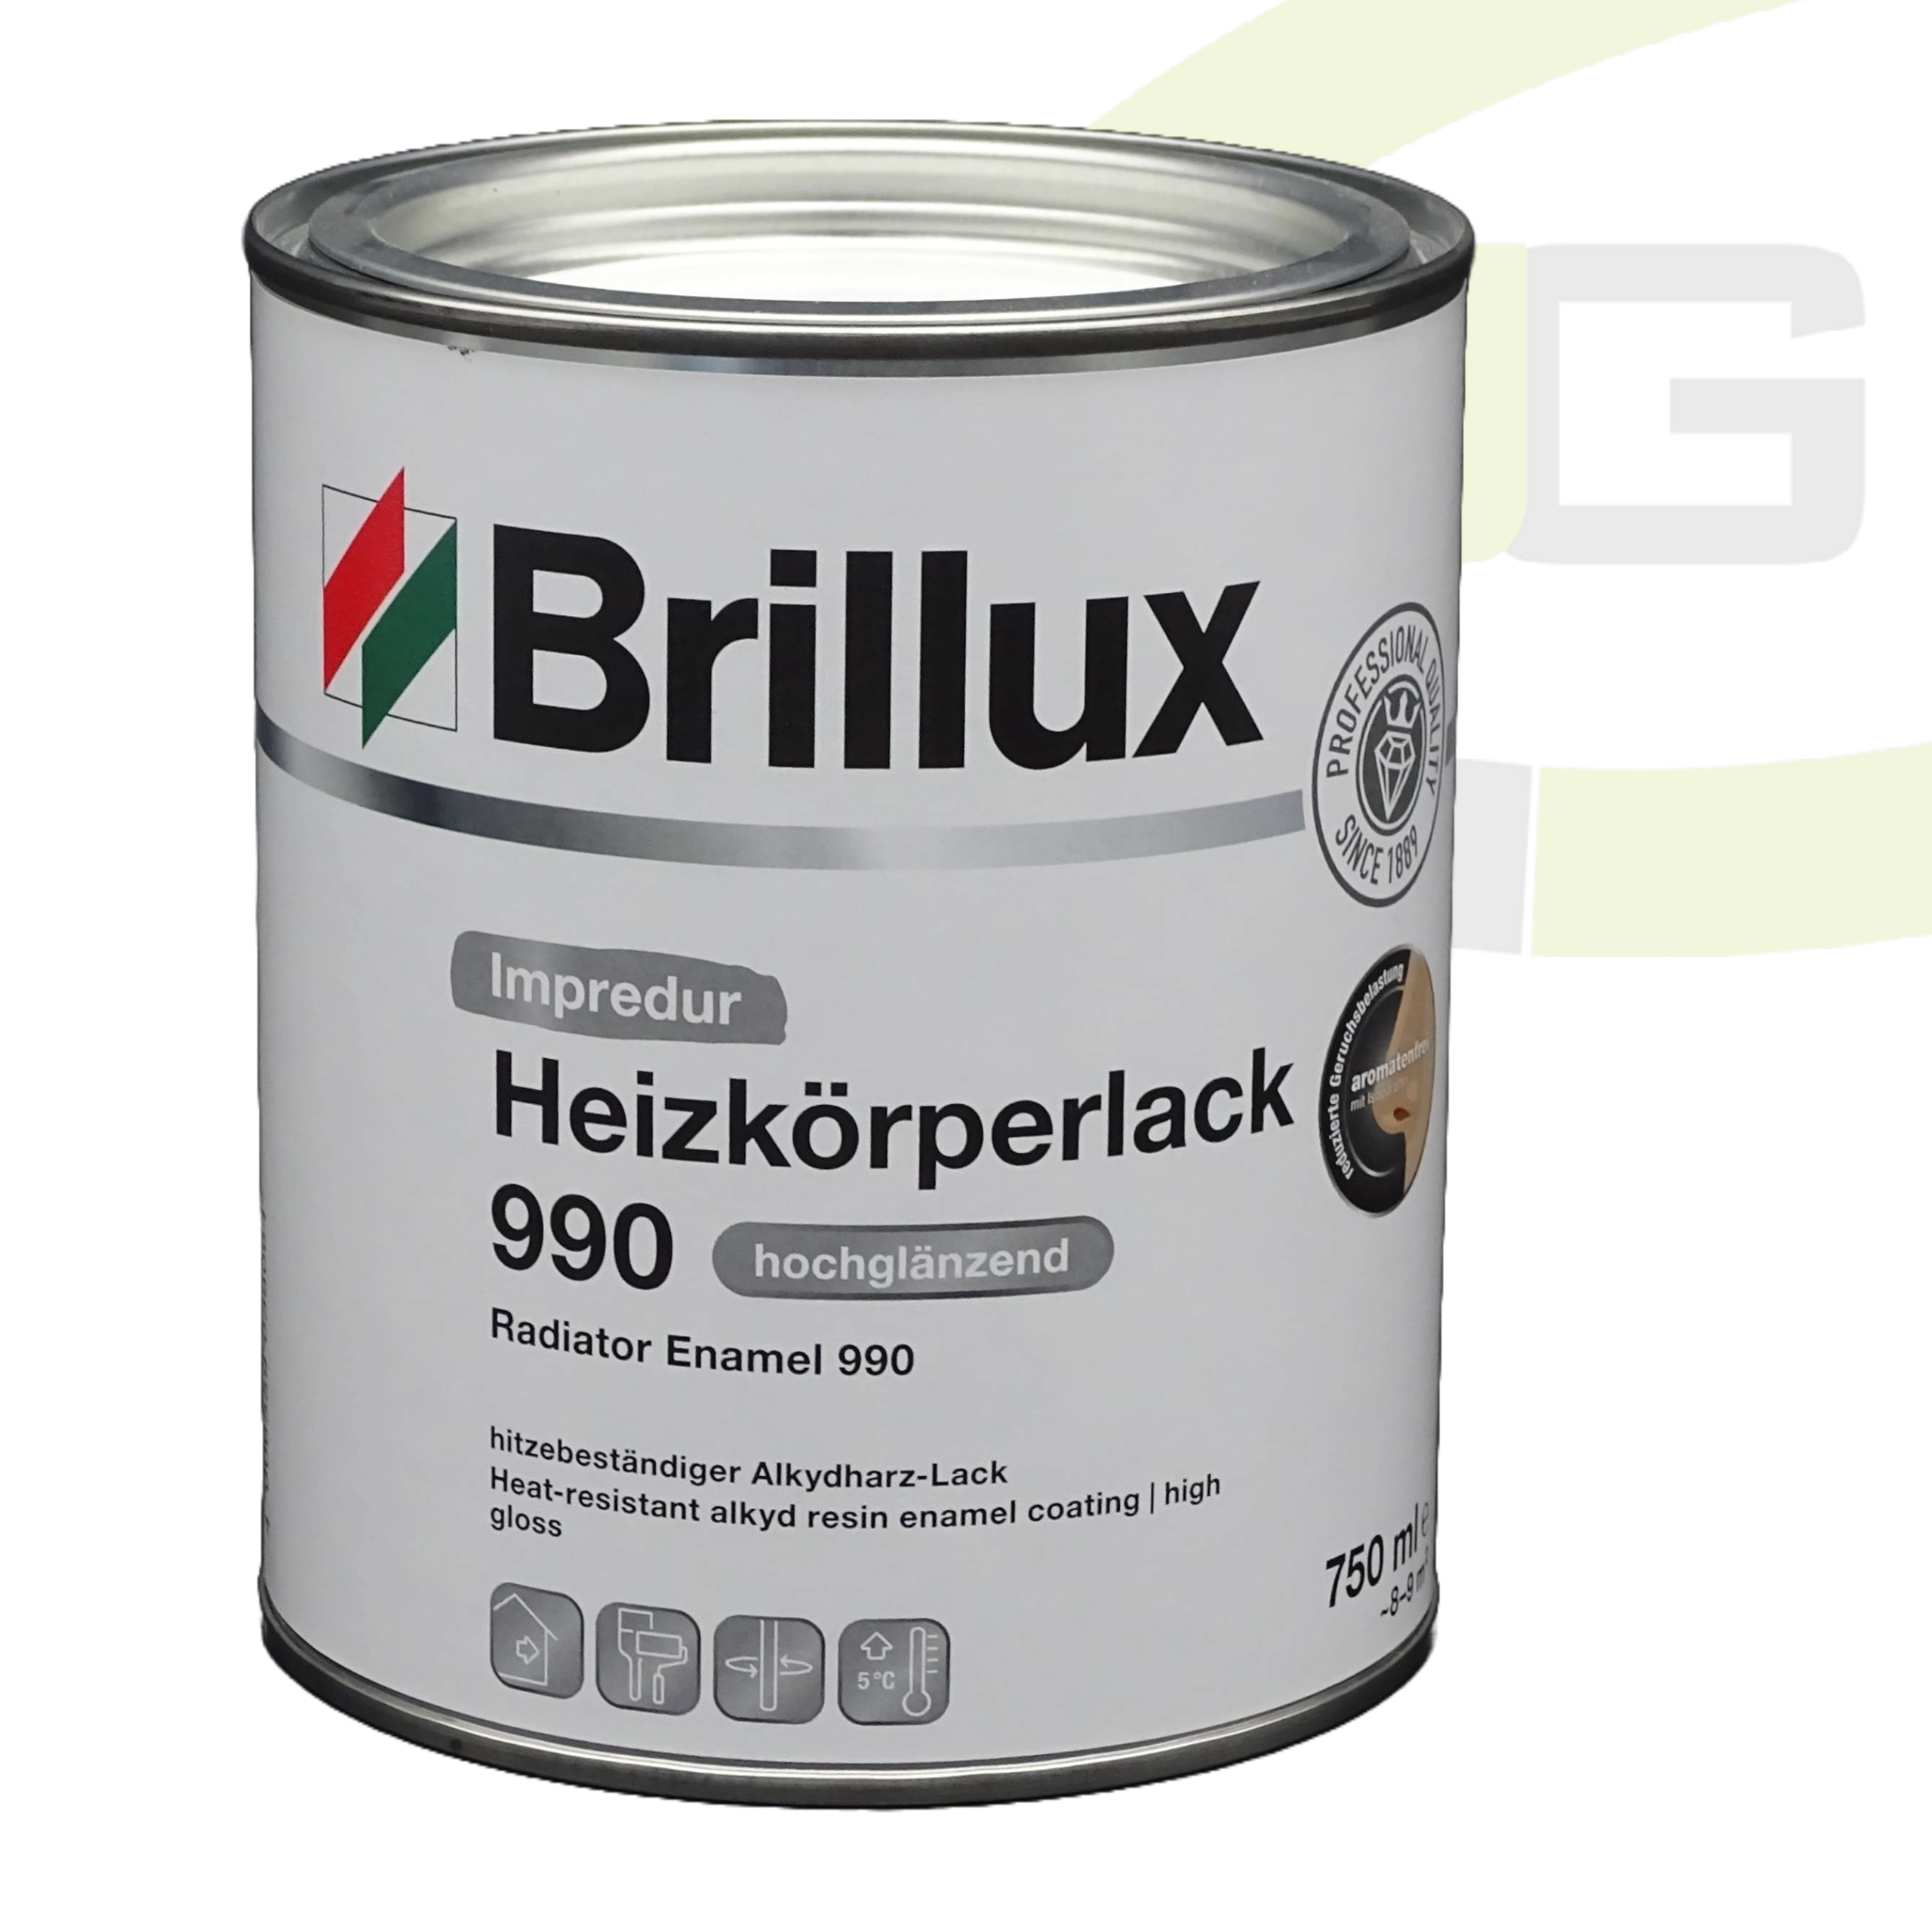 Brillux Impredur Heizkörperlack 990 hochglänzend - 750 ml / Lösungsmittelhaltiger Heizkörperlack 